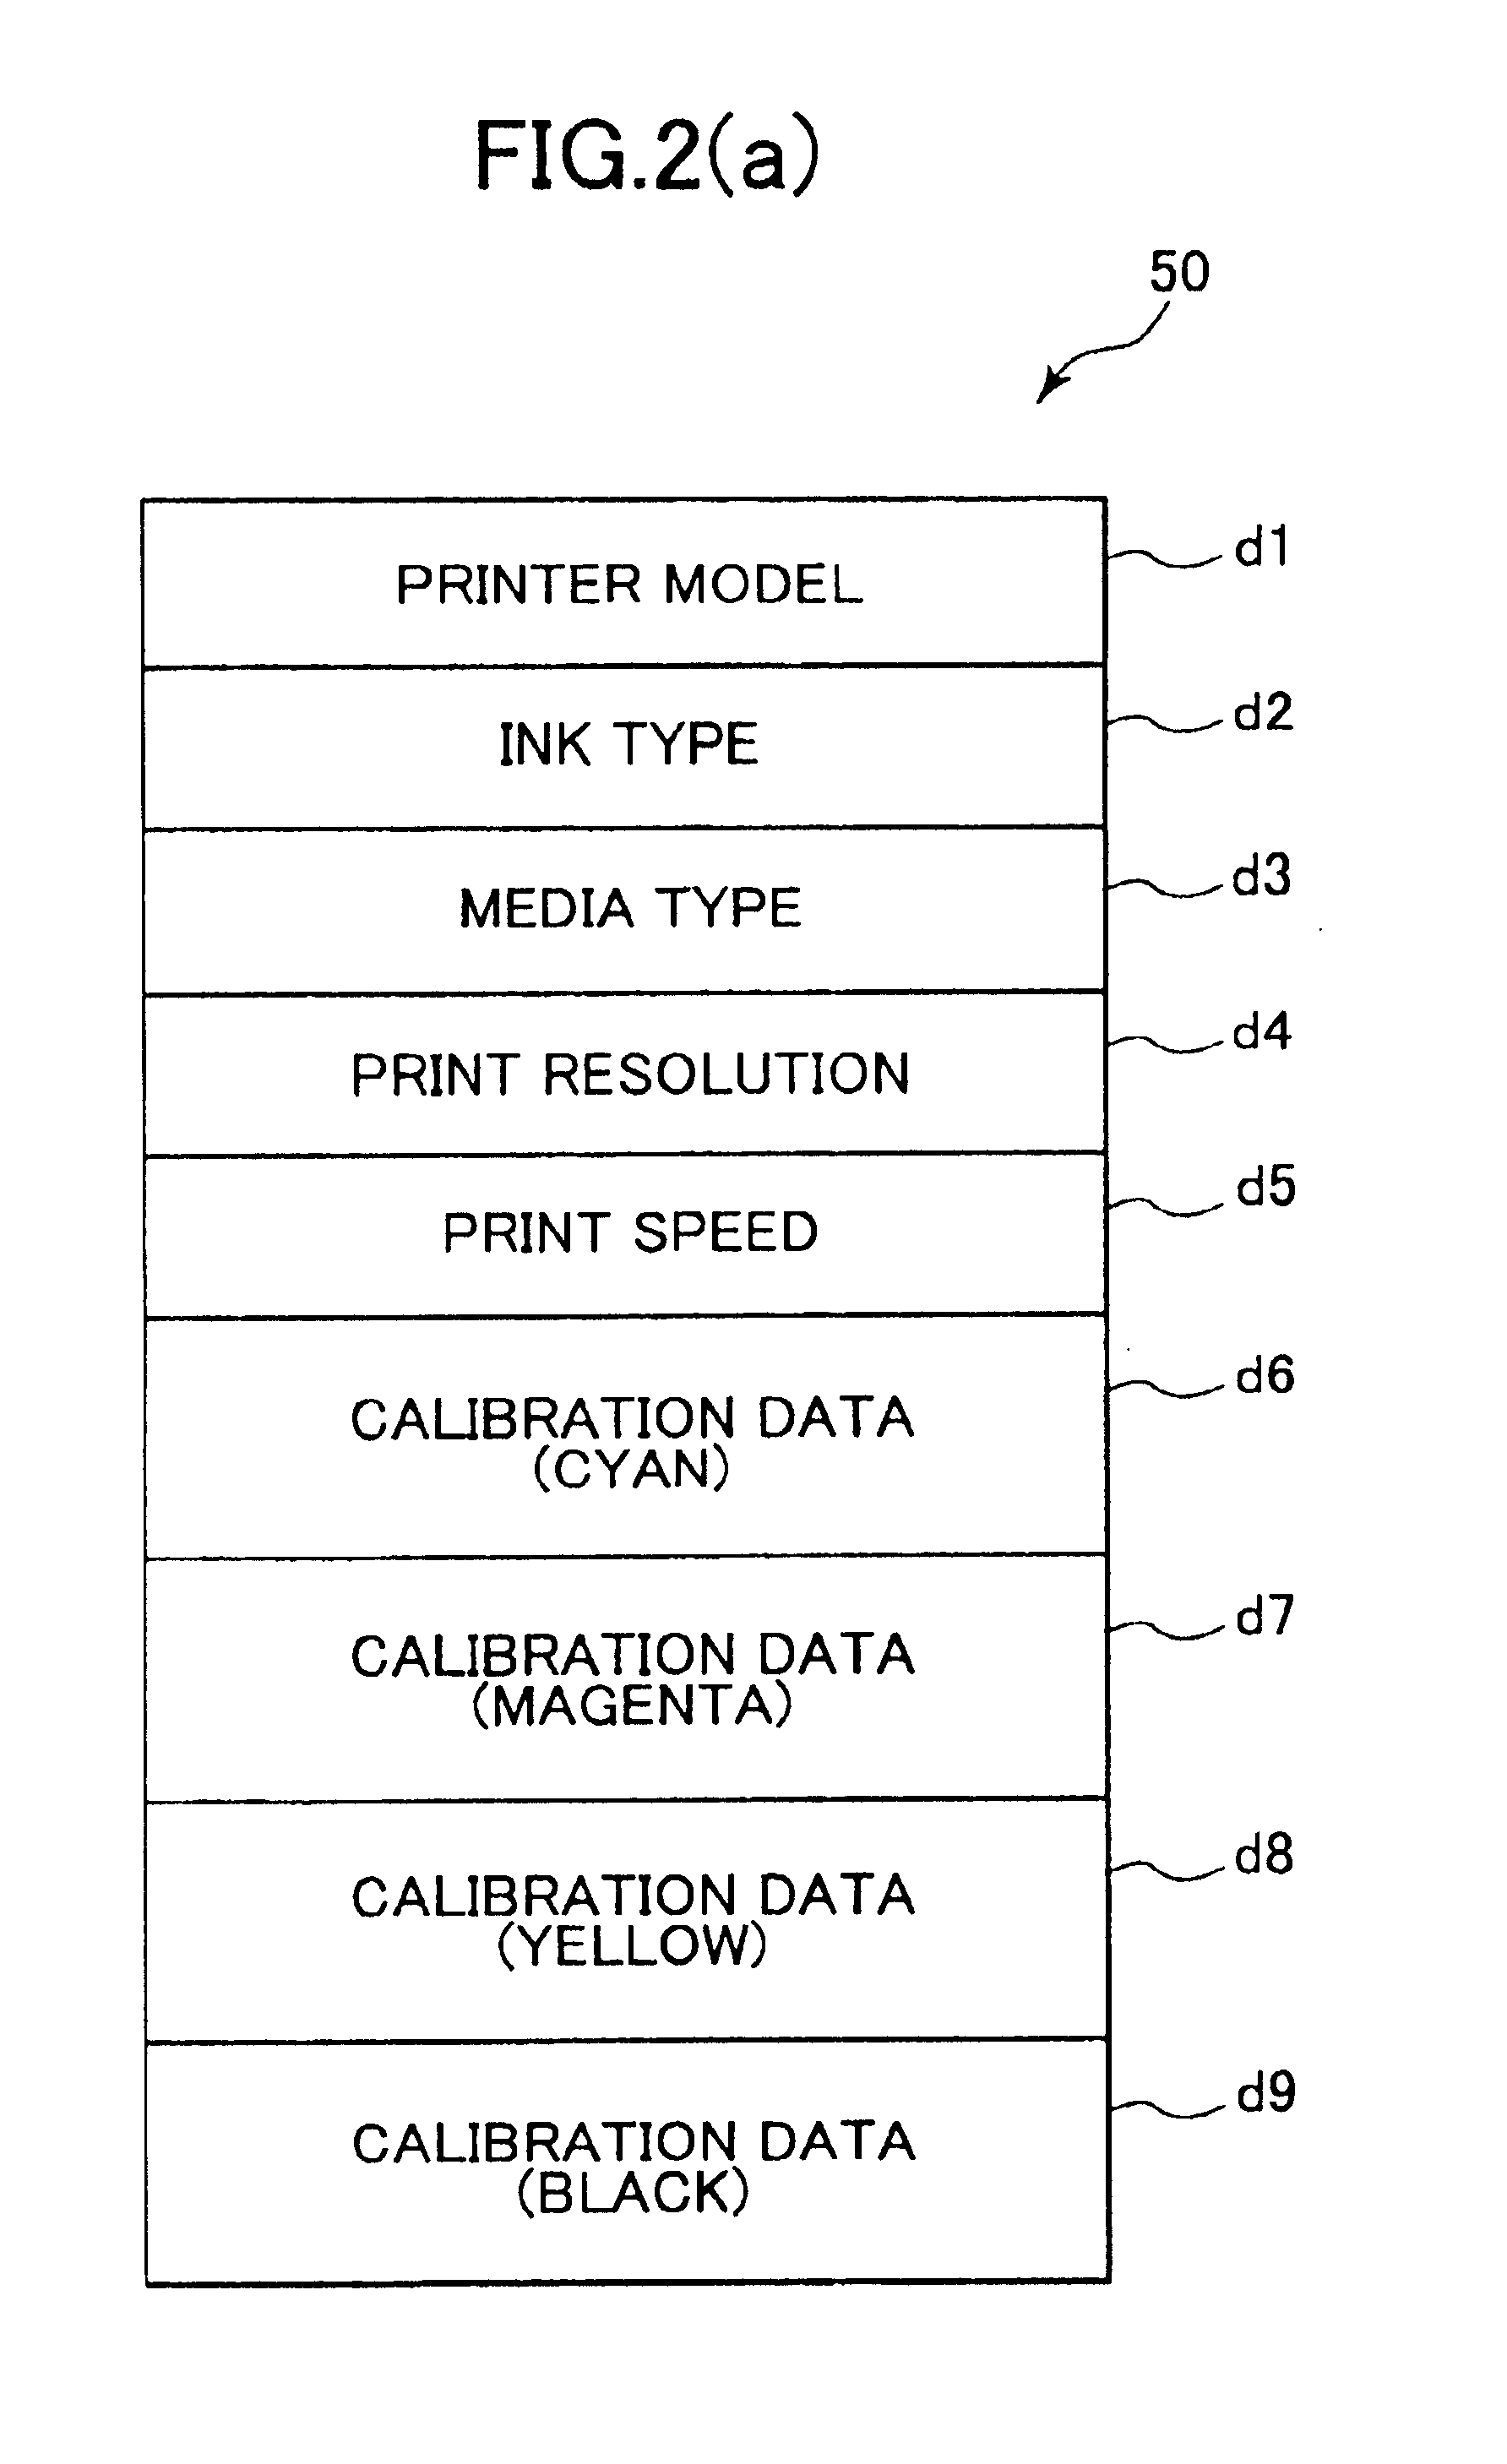 Calibration data setting device